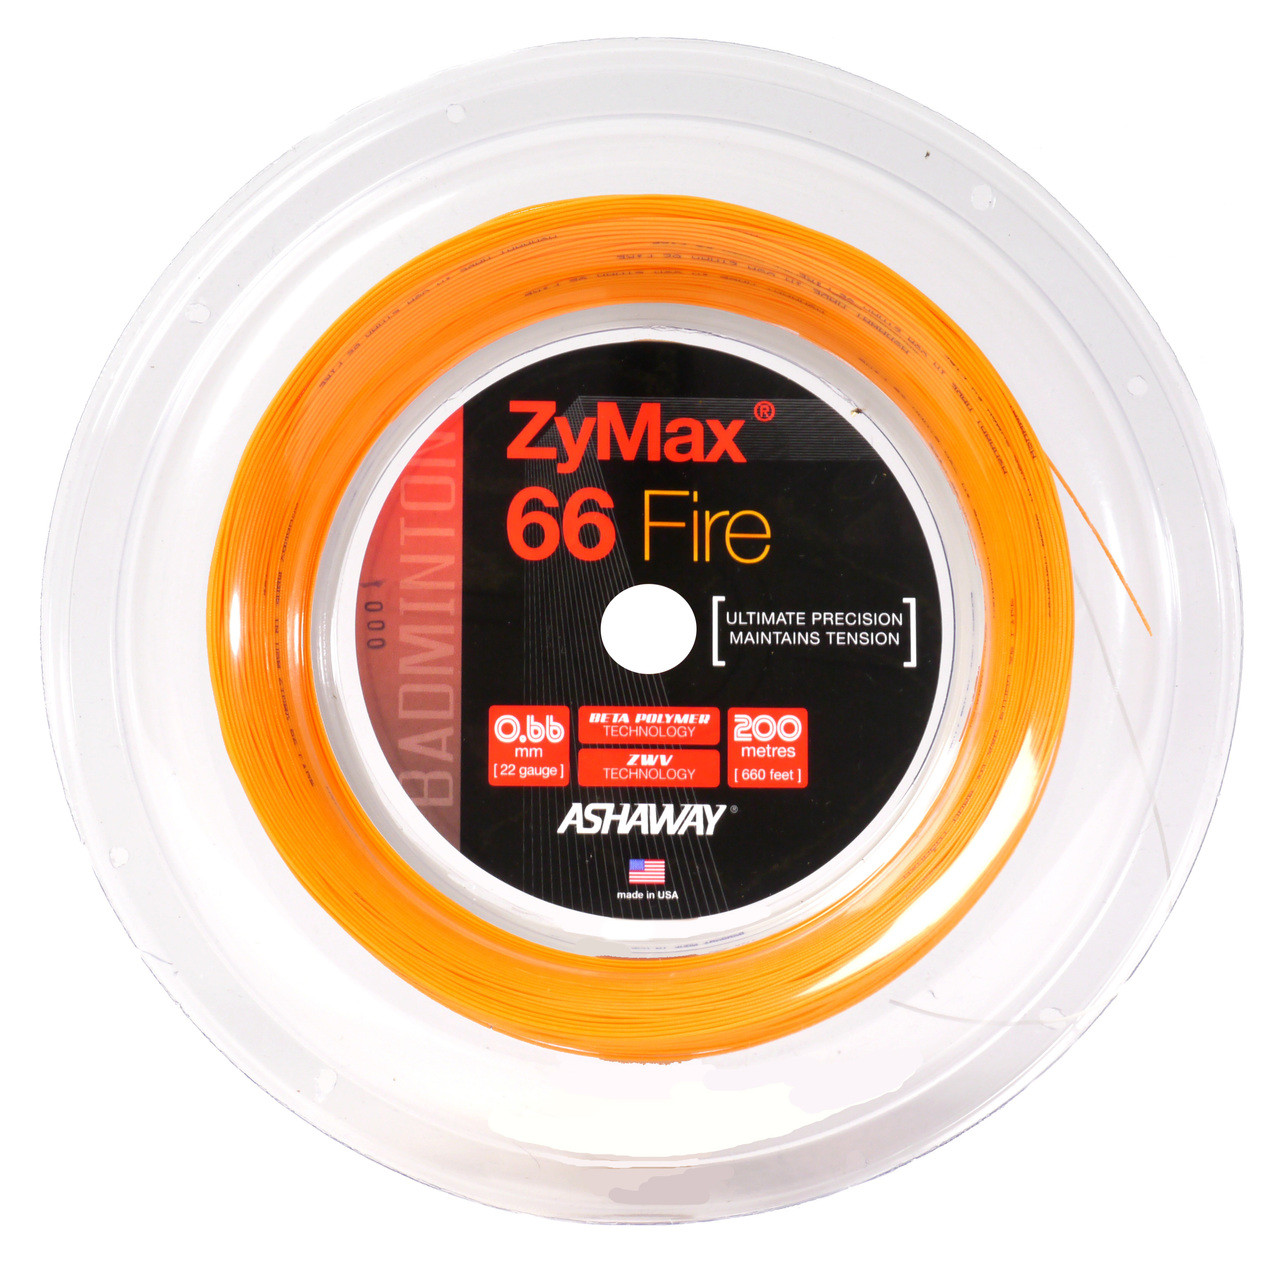 Ashaway ZyMax 66 Fire 0.66mm Badminton 200M Reel - W & D Strings